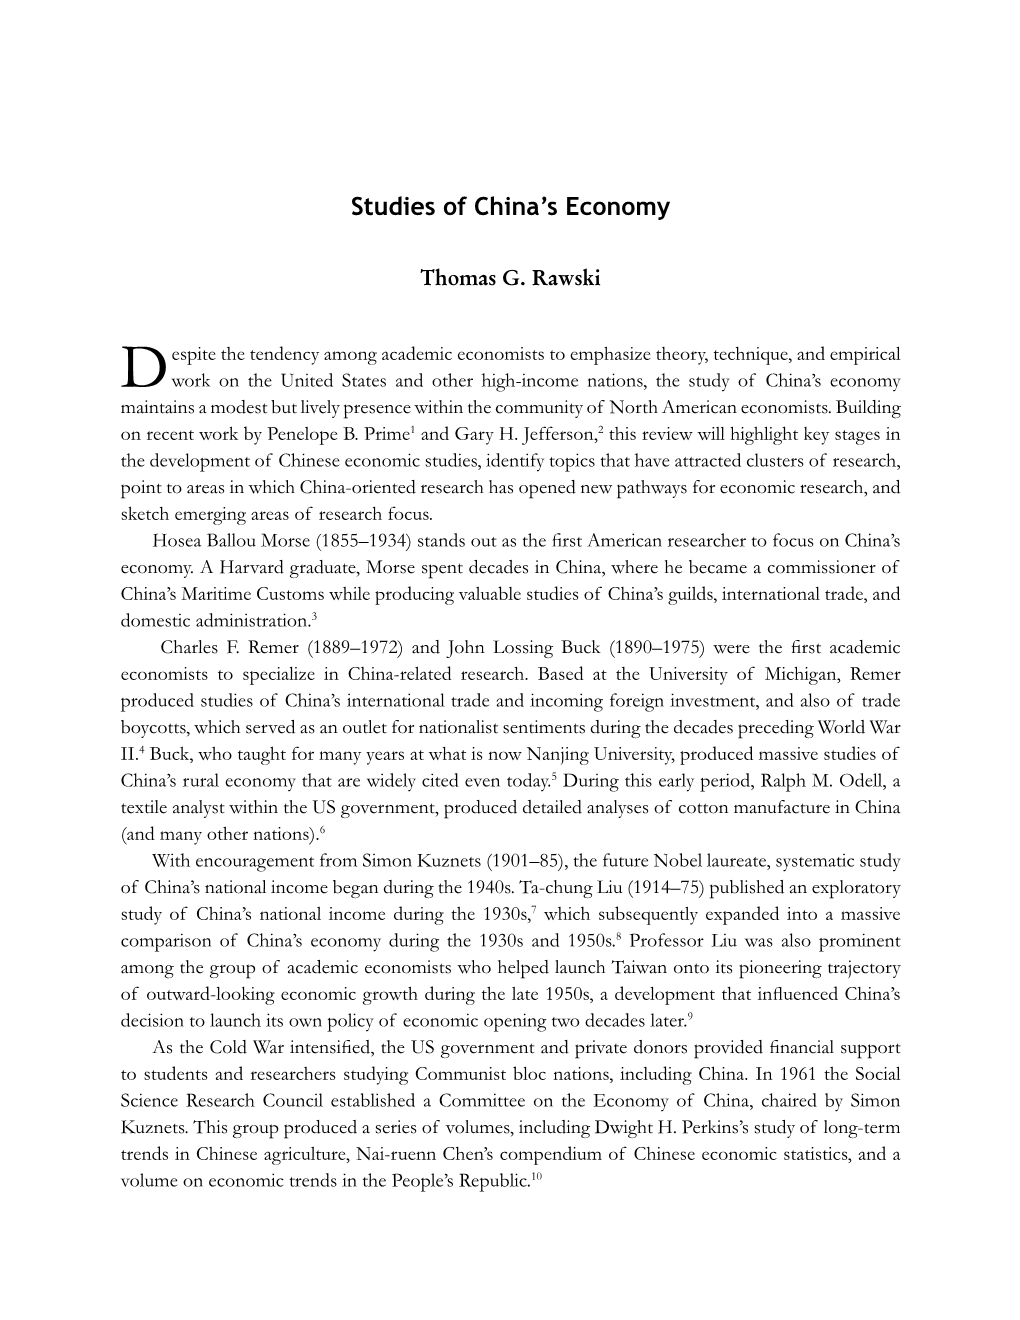 Studies of China's Economy in North America